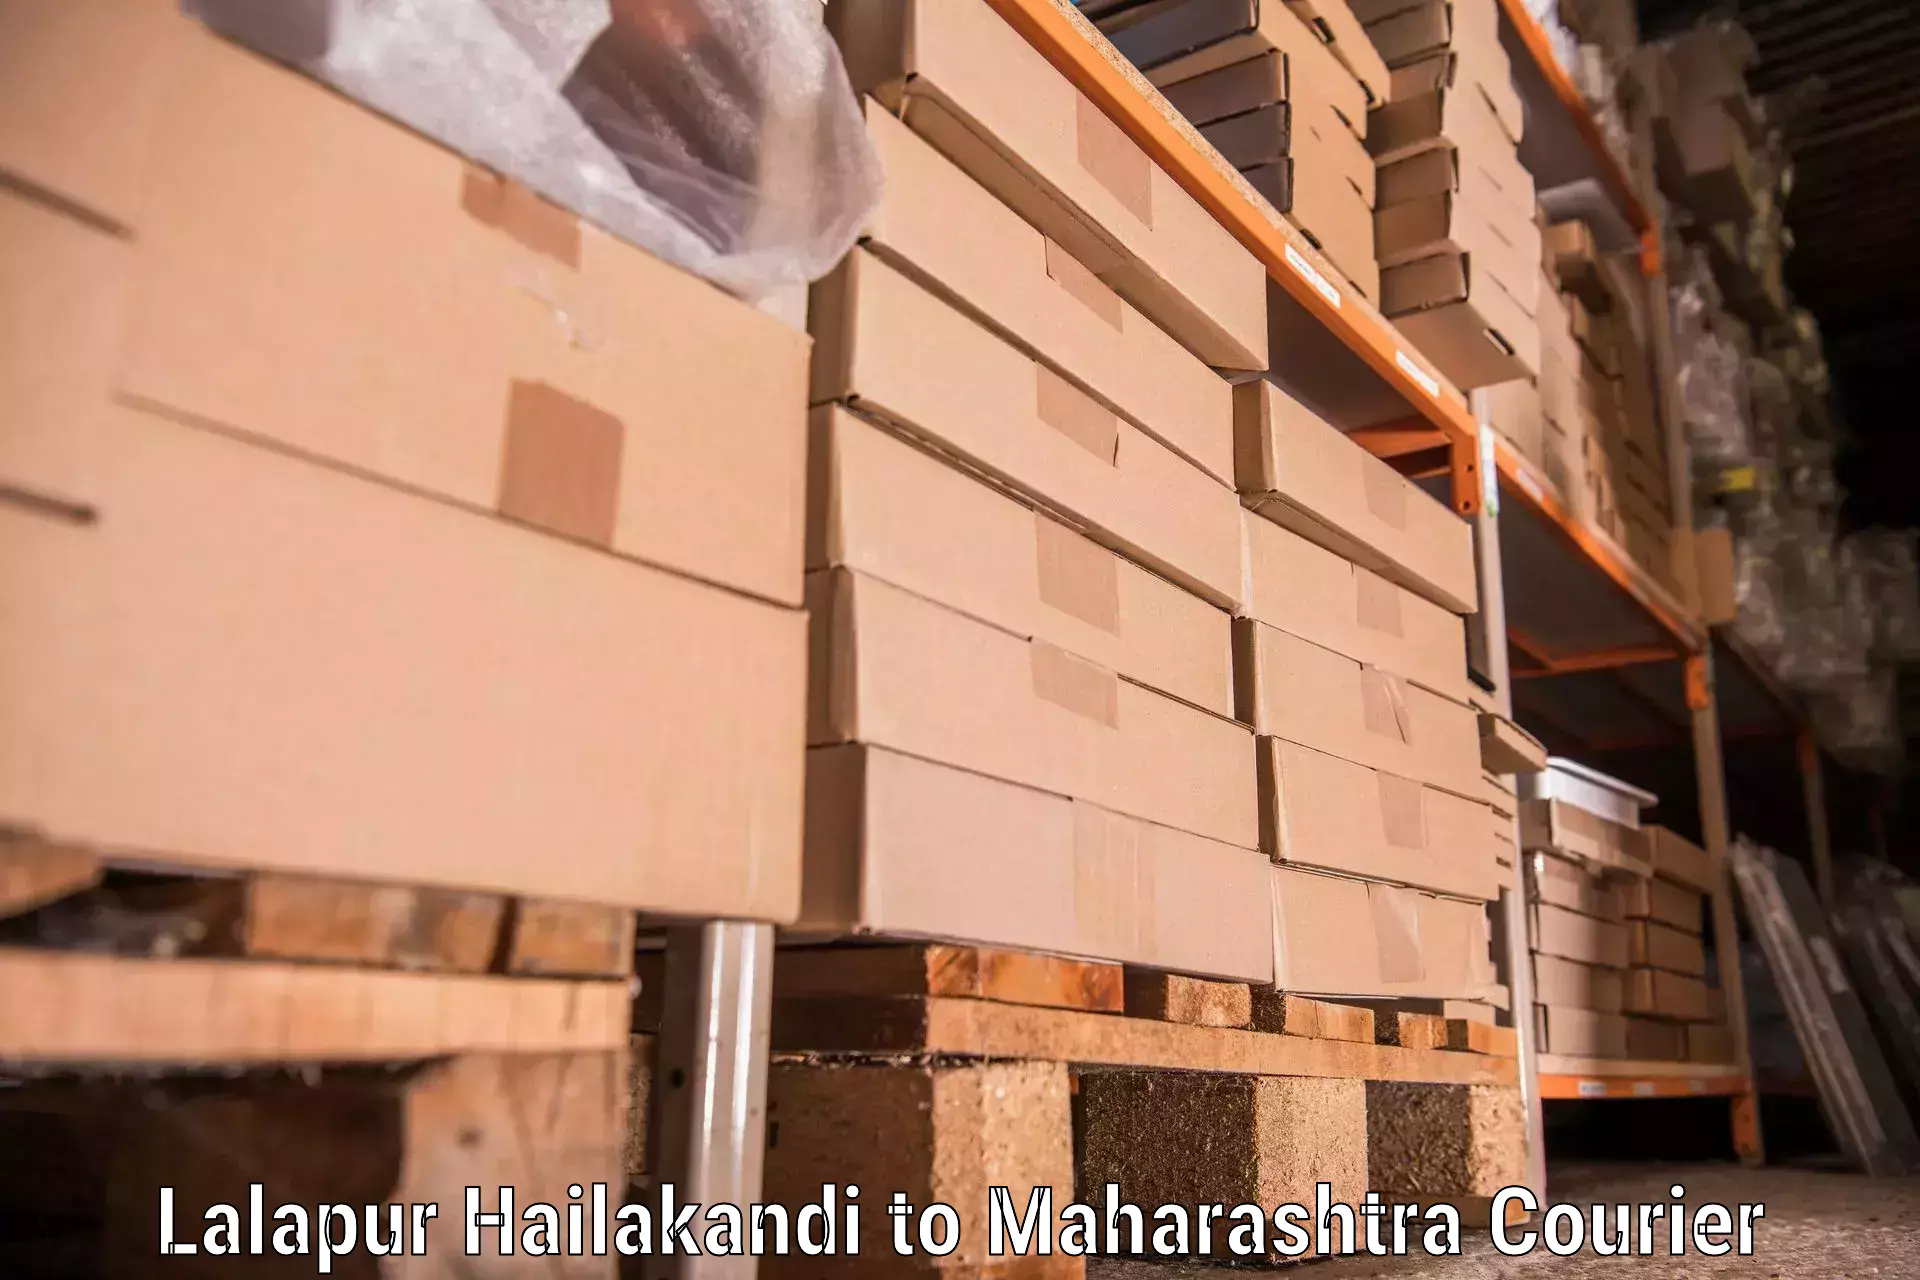 Home goods moving company Lalapur Hailakandi to Ahmednagar